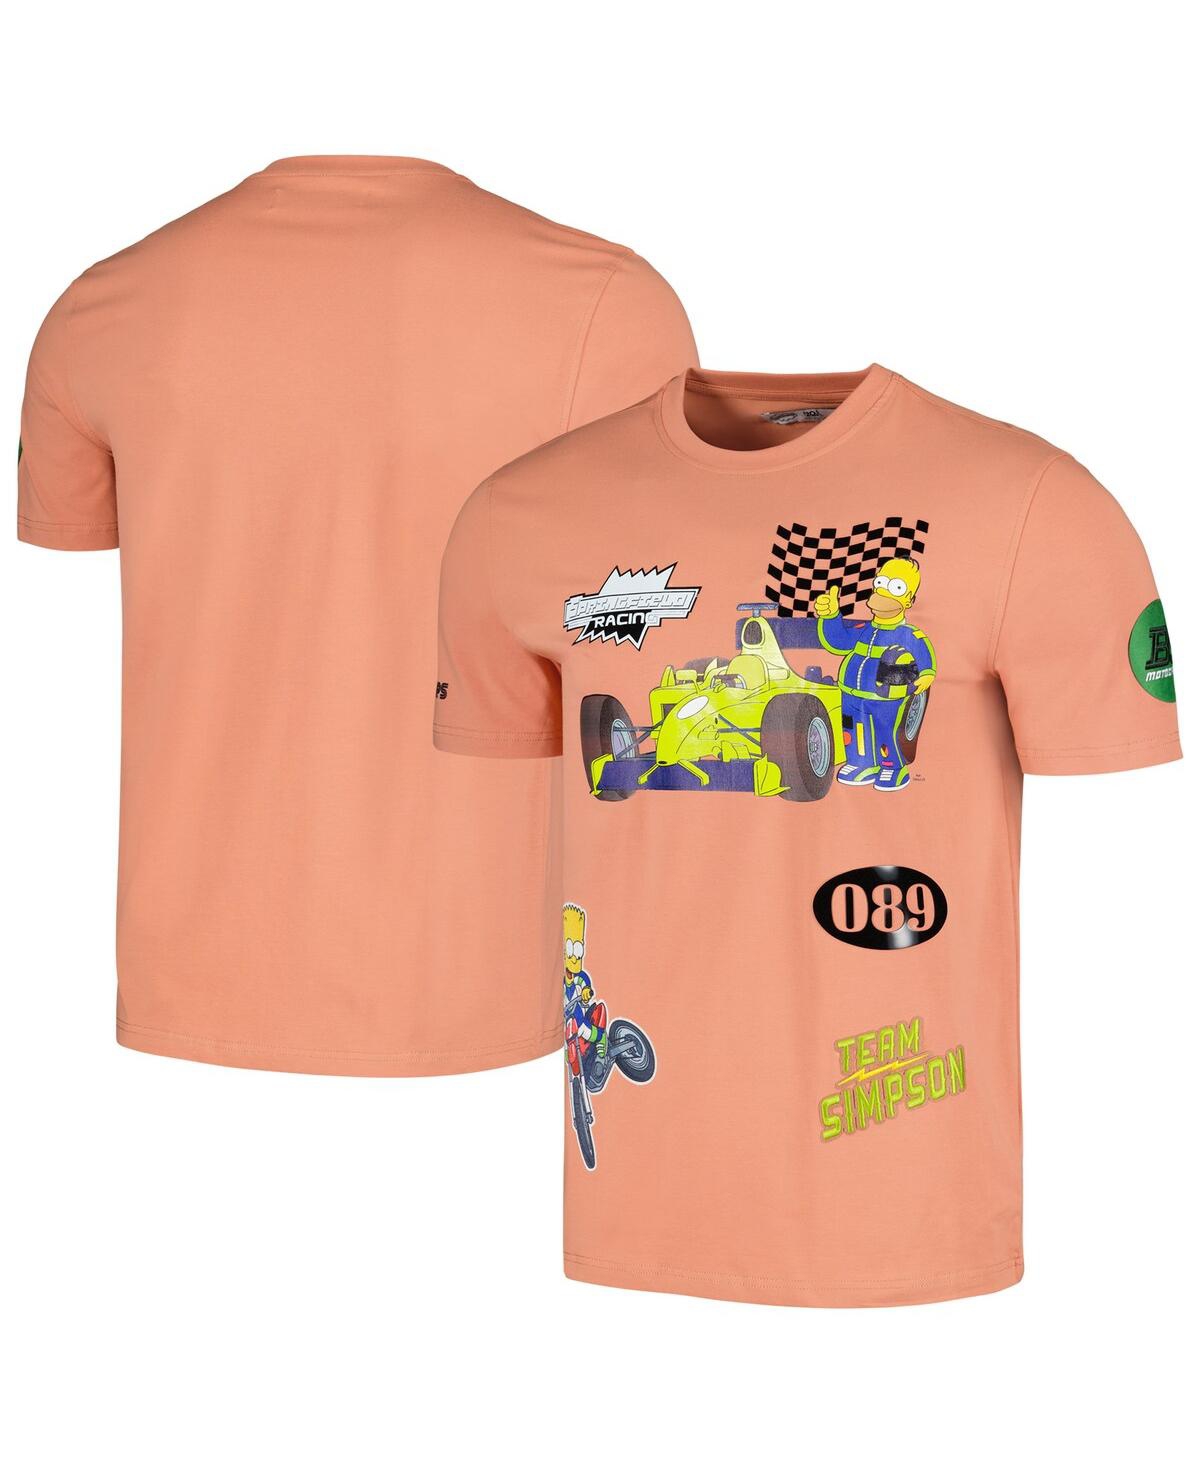 Men's and Women's Freeze Max Orange The Simpsons Racing T-shirt - Orange